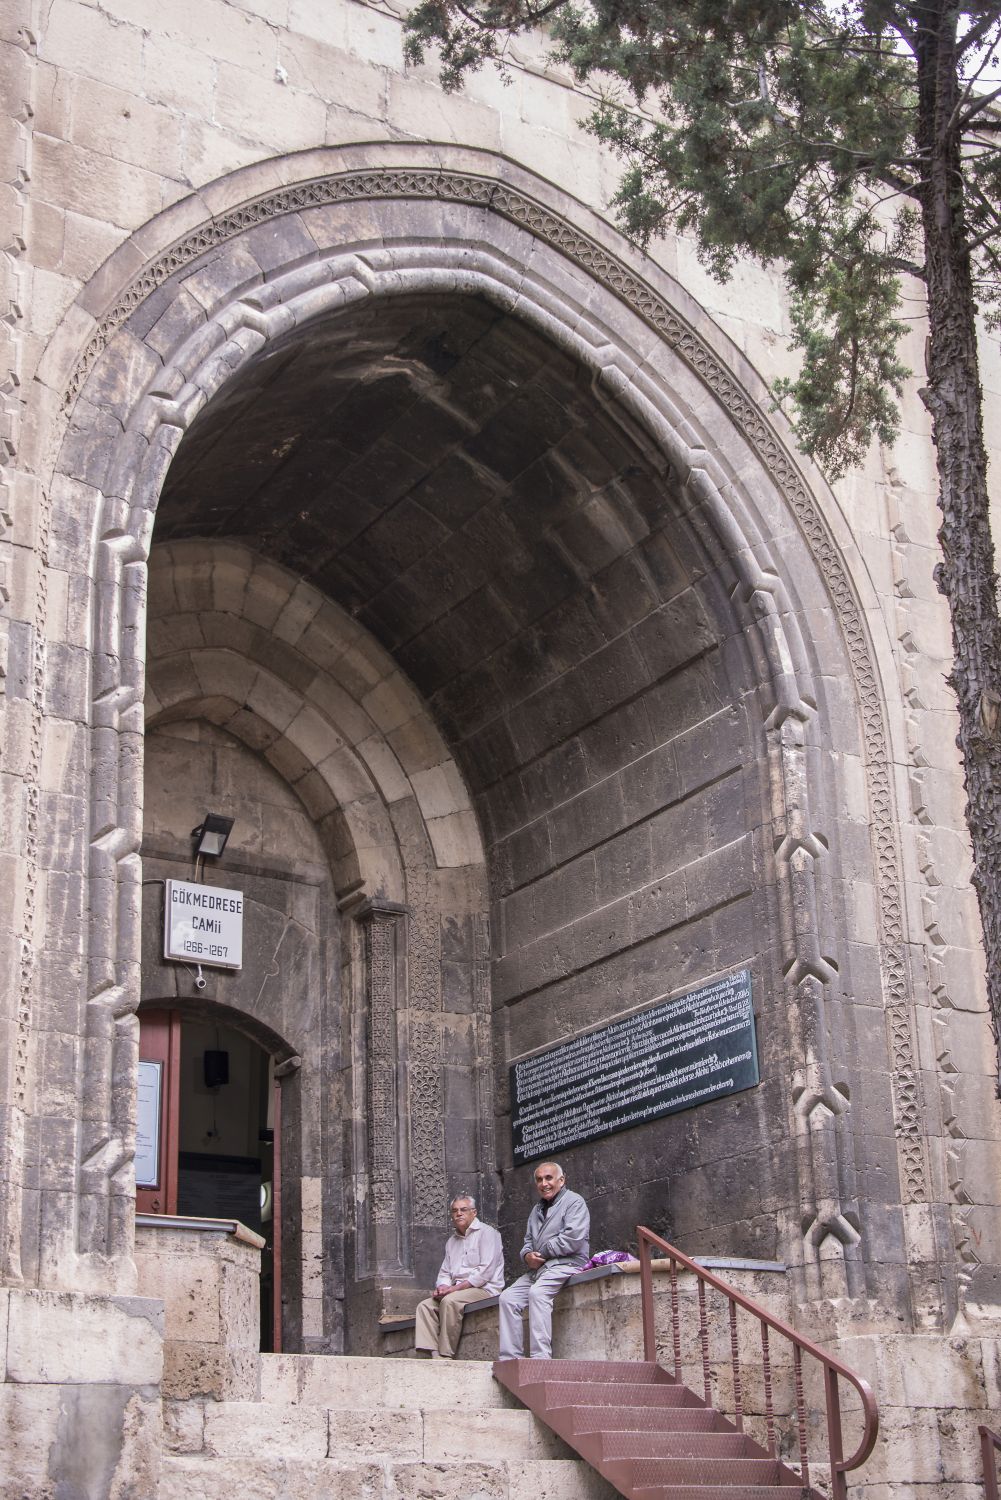 View of entrance portal on north facade.